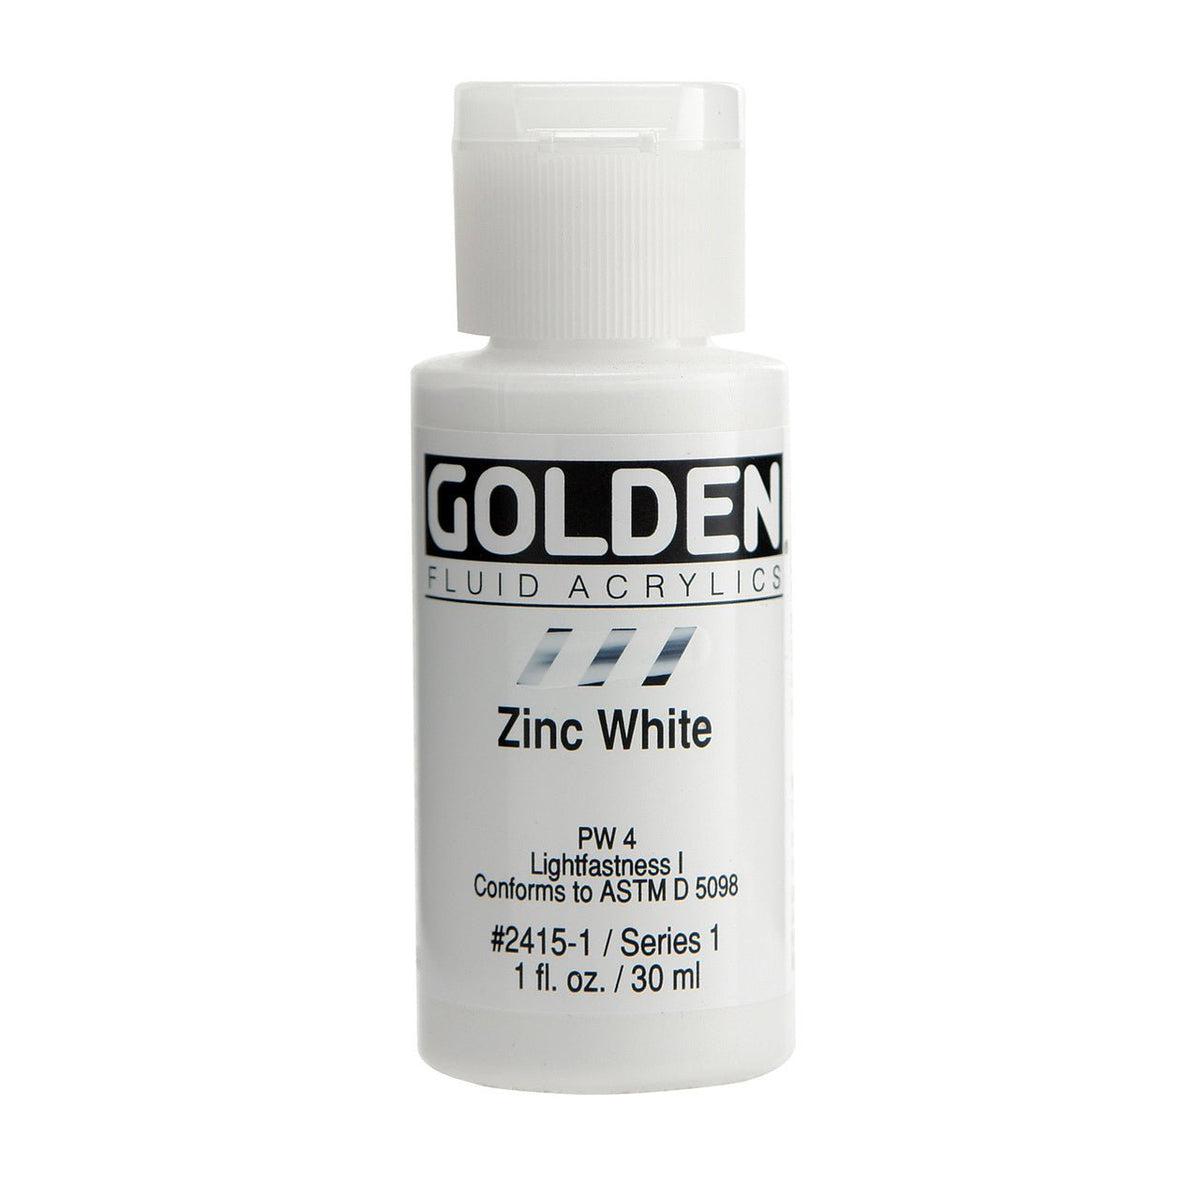 Golden Fluid Acrylic - Zinc White 16 oz.